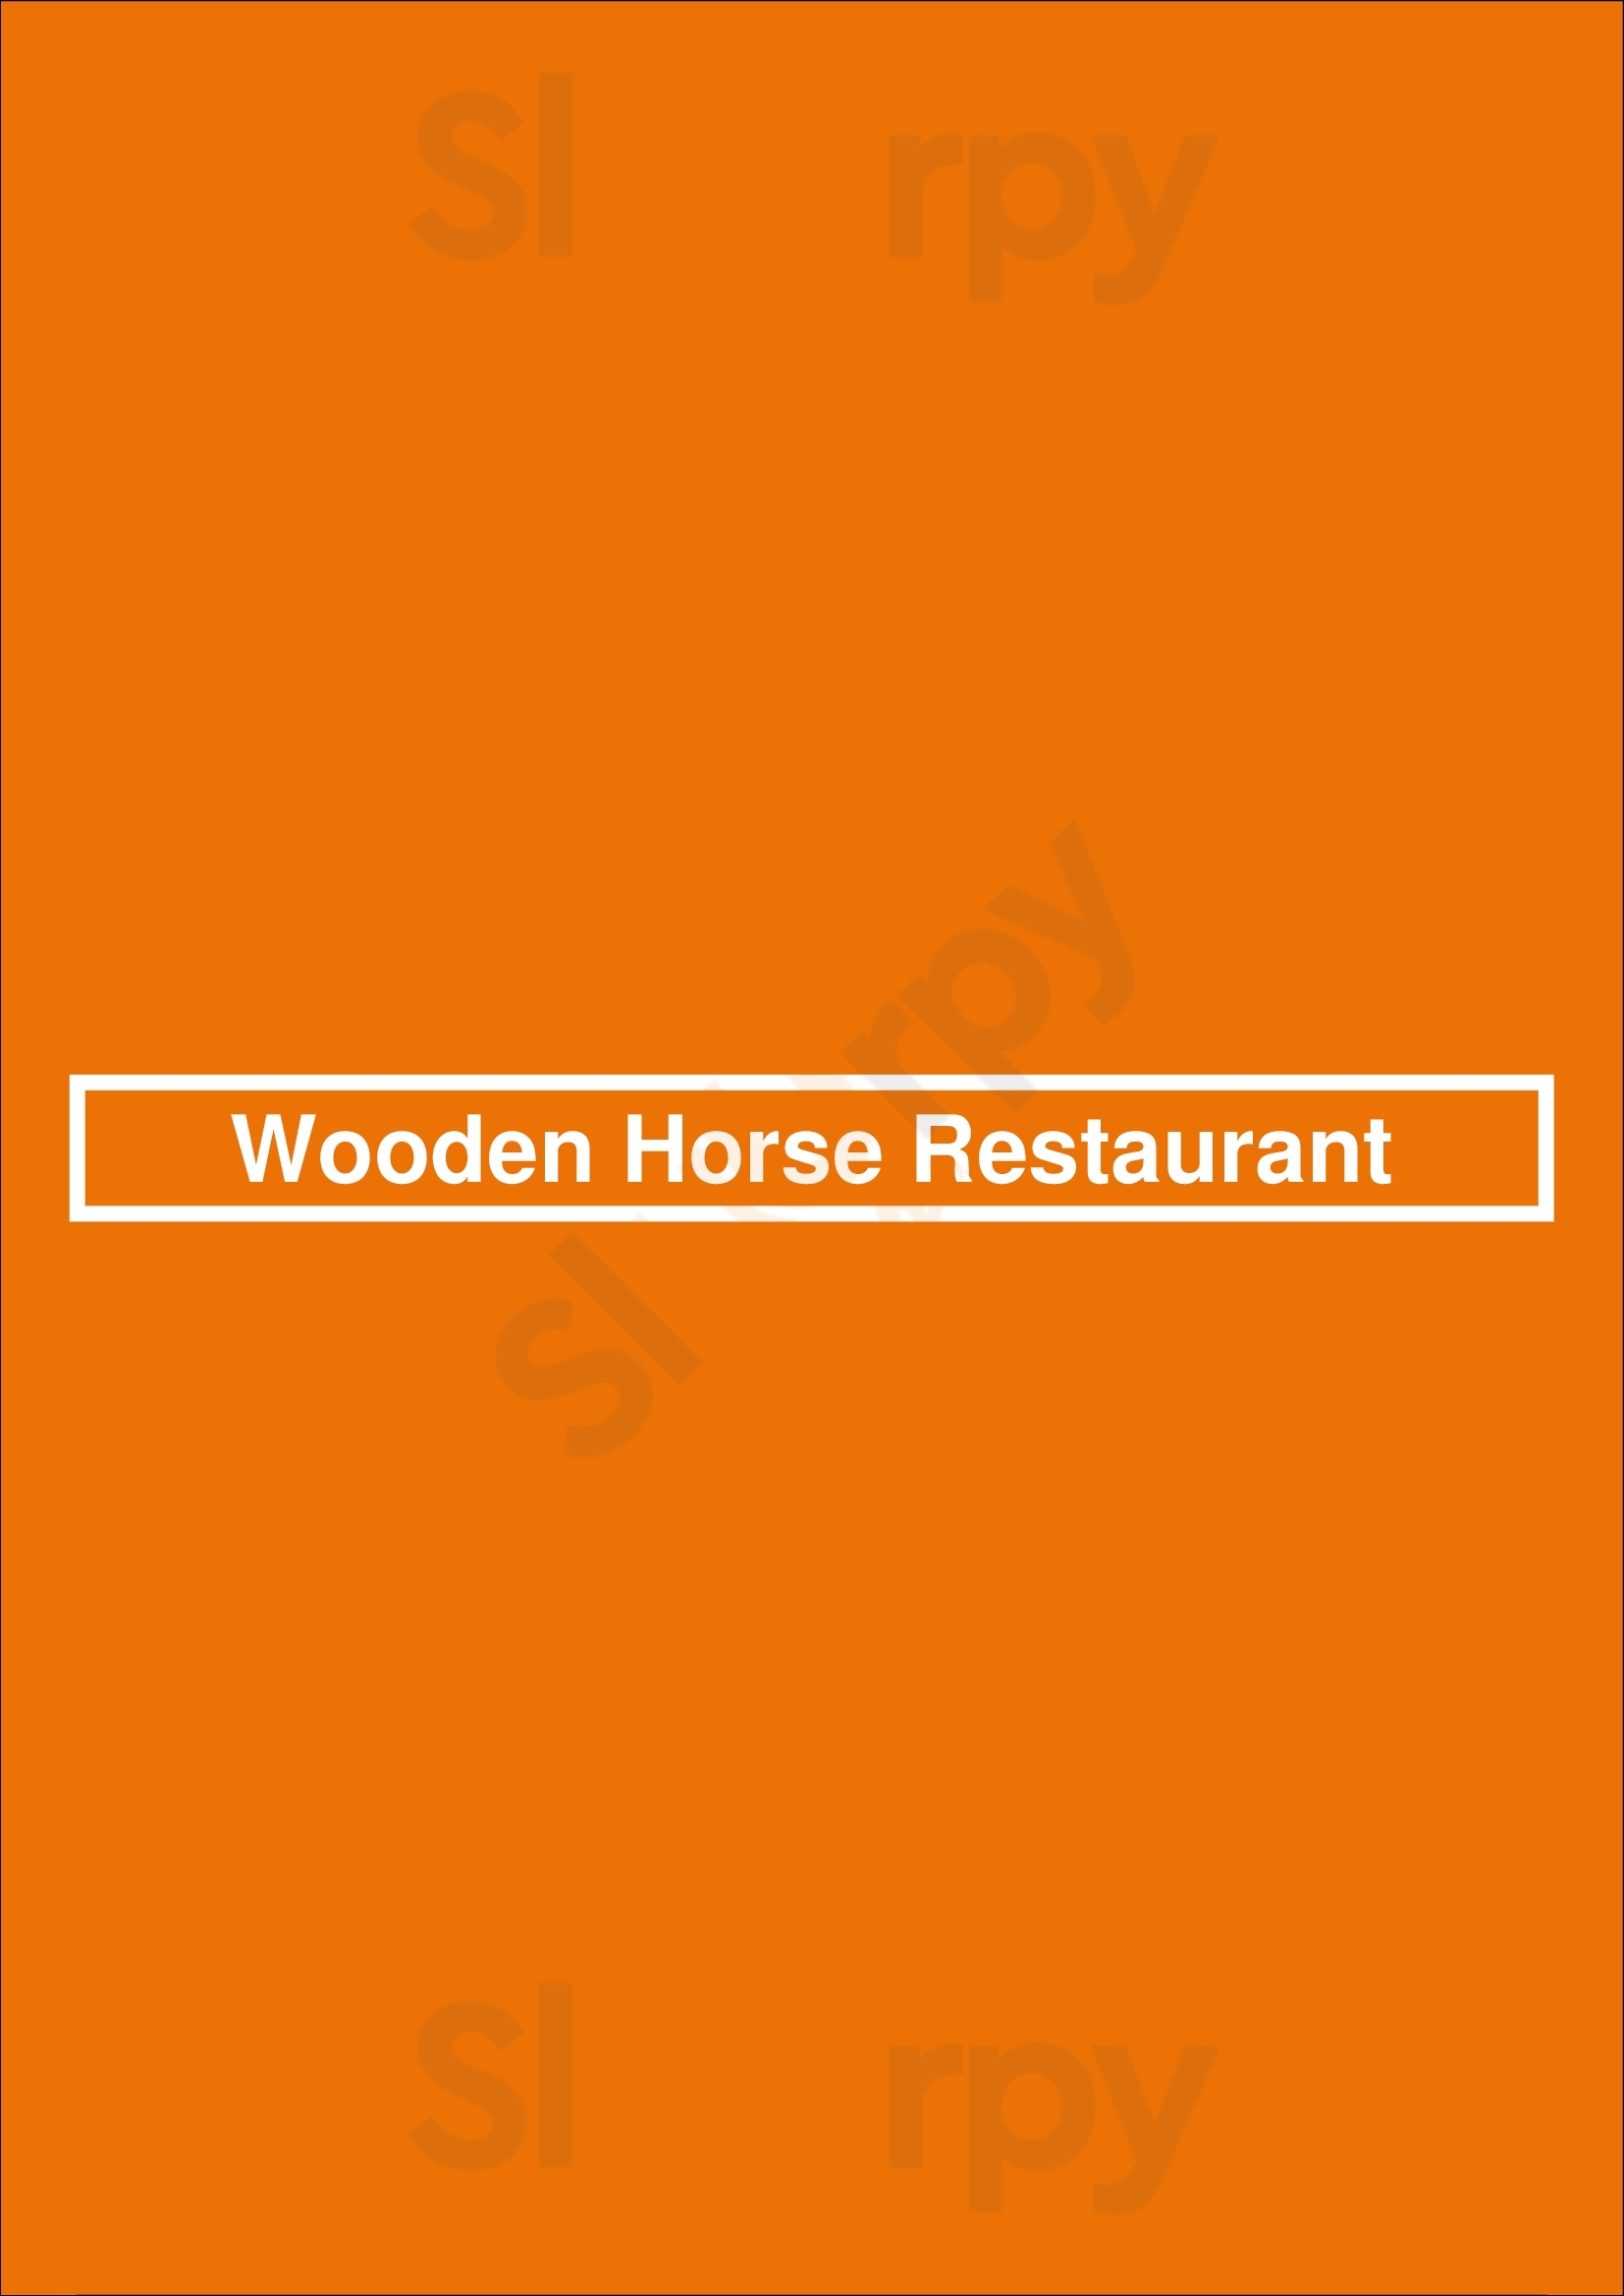 Wooden Horse Restaurant & Bar Brisbane Menu - 1